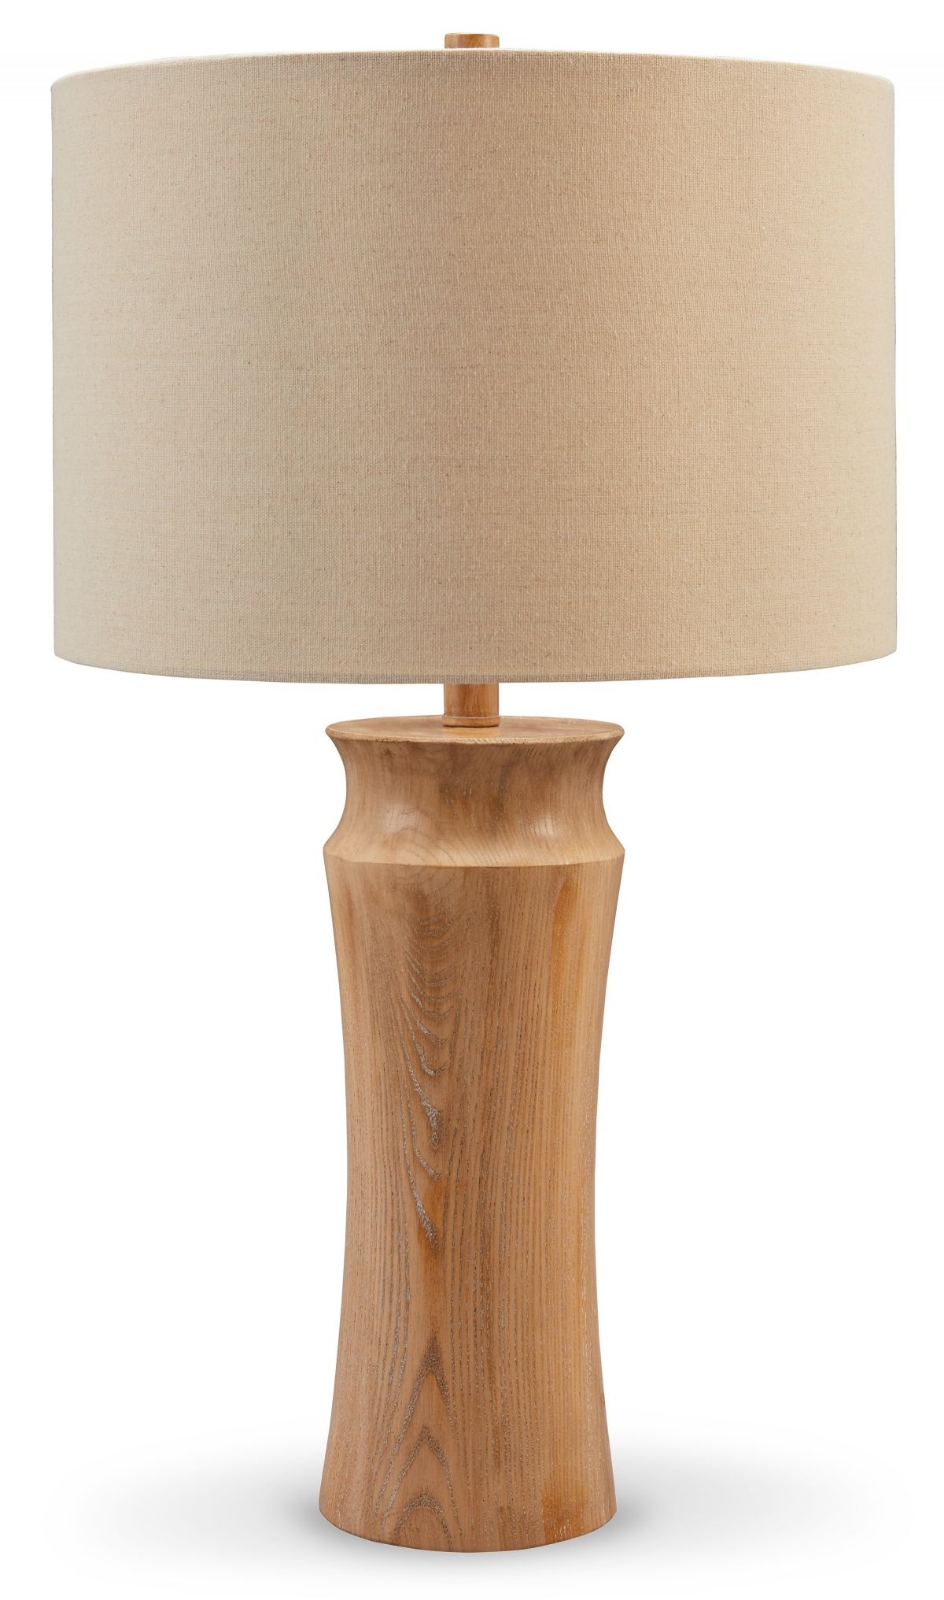 Picture of Orensboro Table Lamp